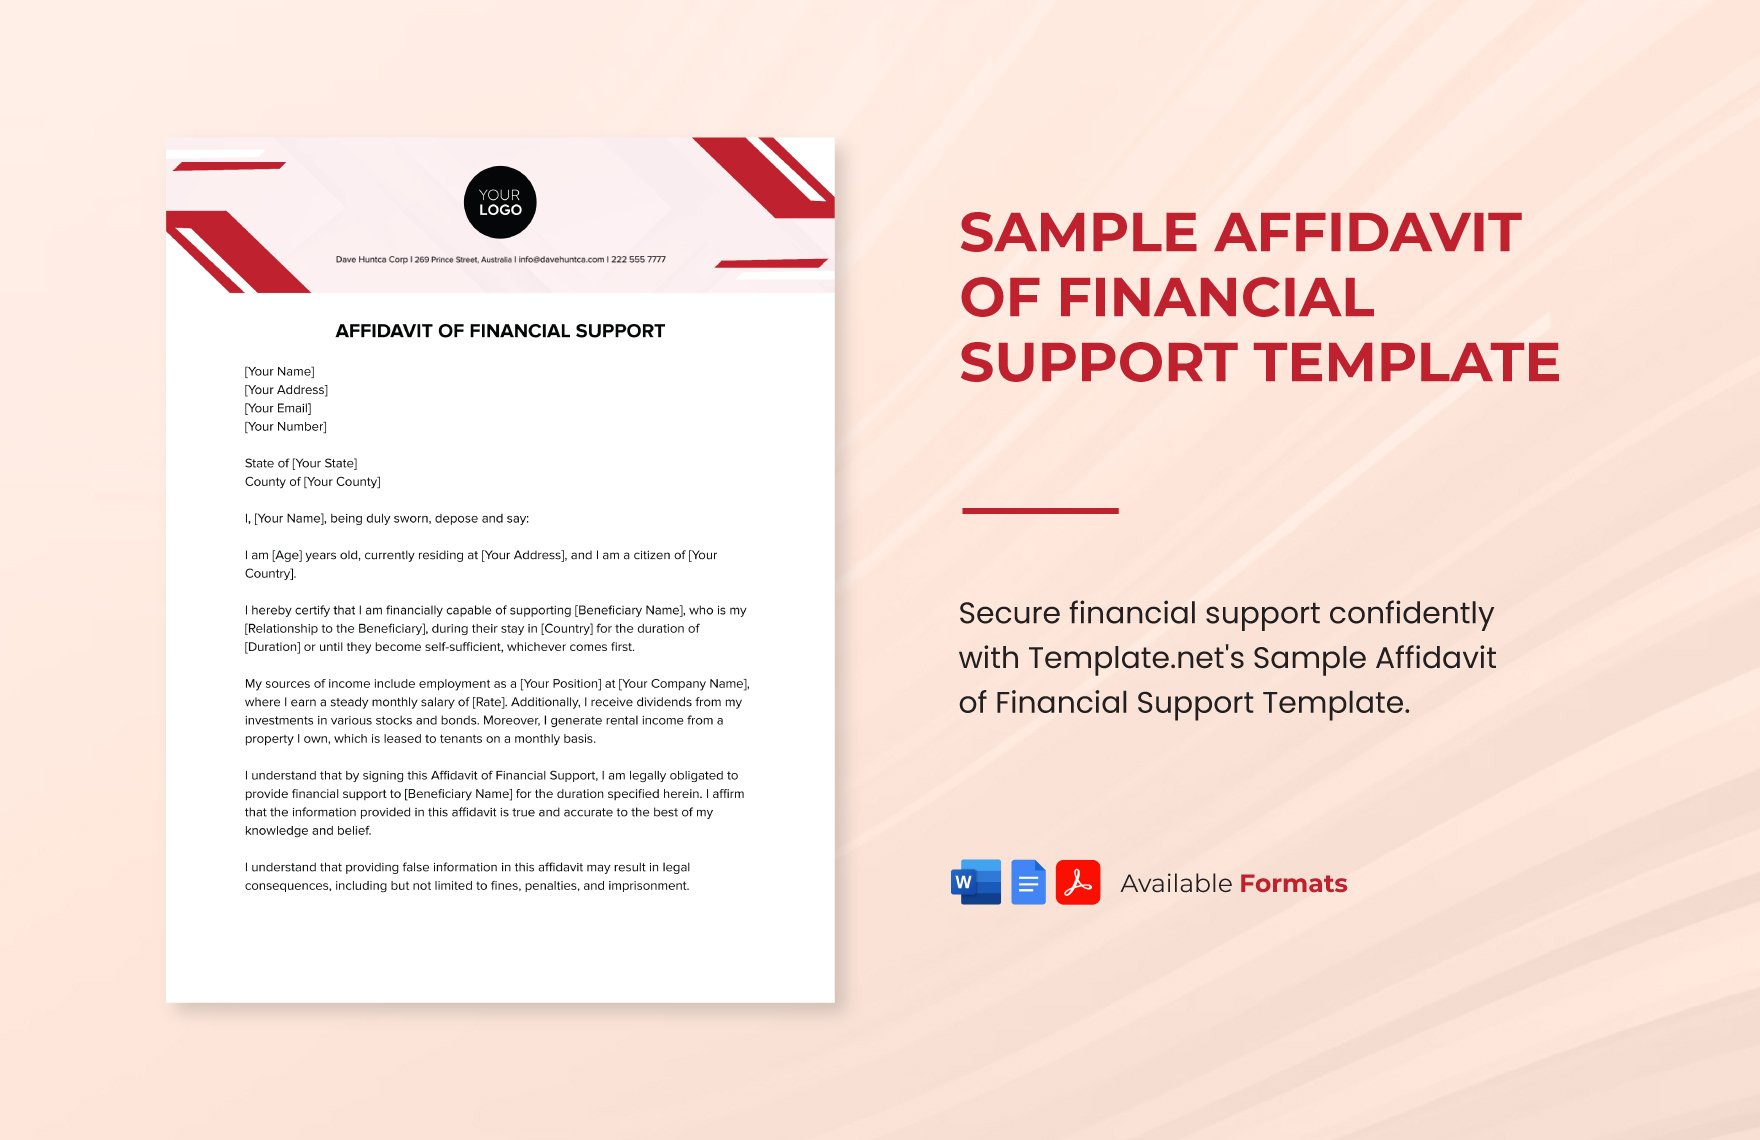 Sample Affidavit of Financial Support Template